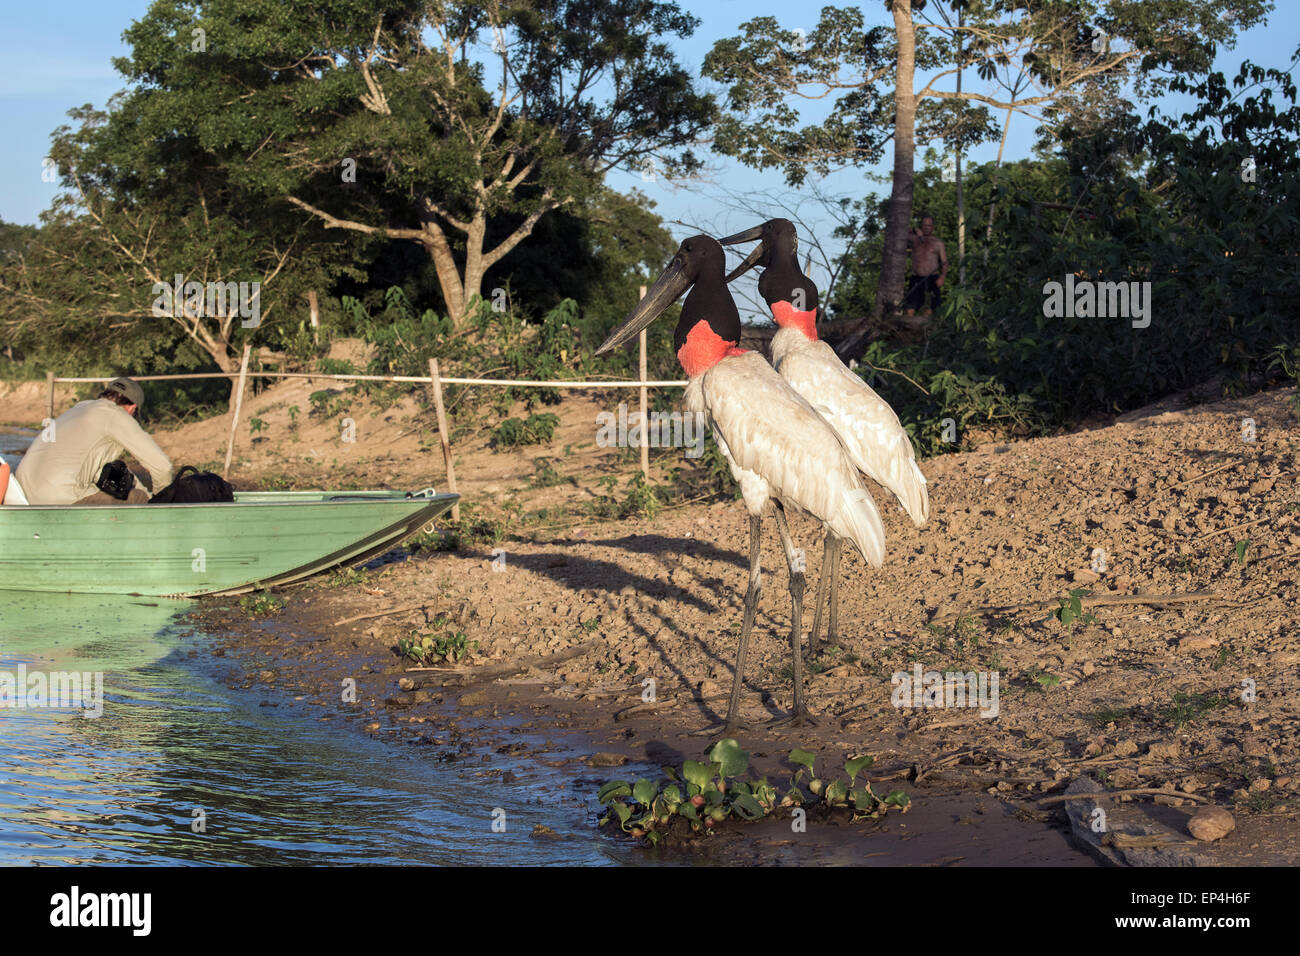 Hey mister, got any fish!  Jabiru storks begging for leftovers, Pixaim River, Pantanal, Brazil Stock Photo